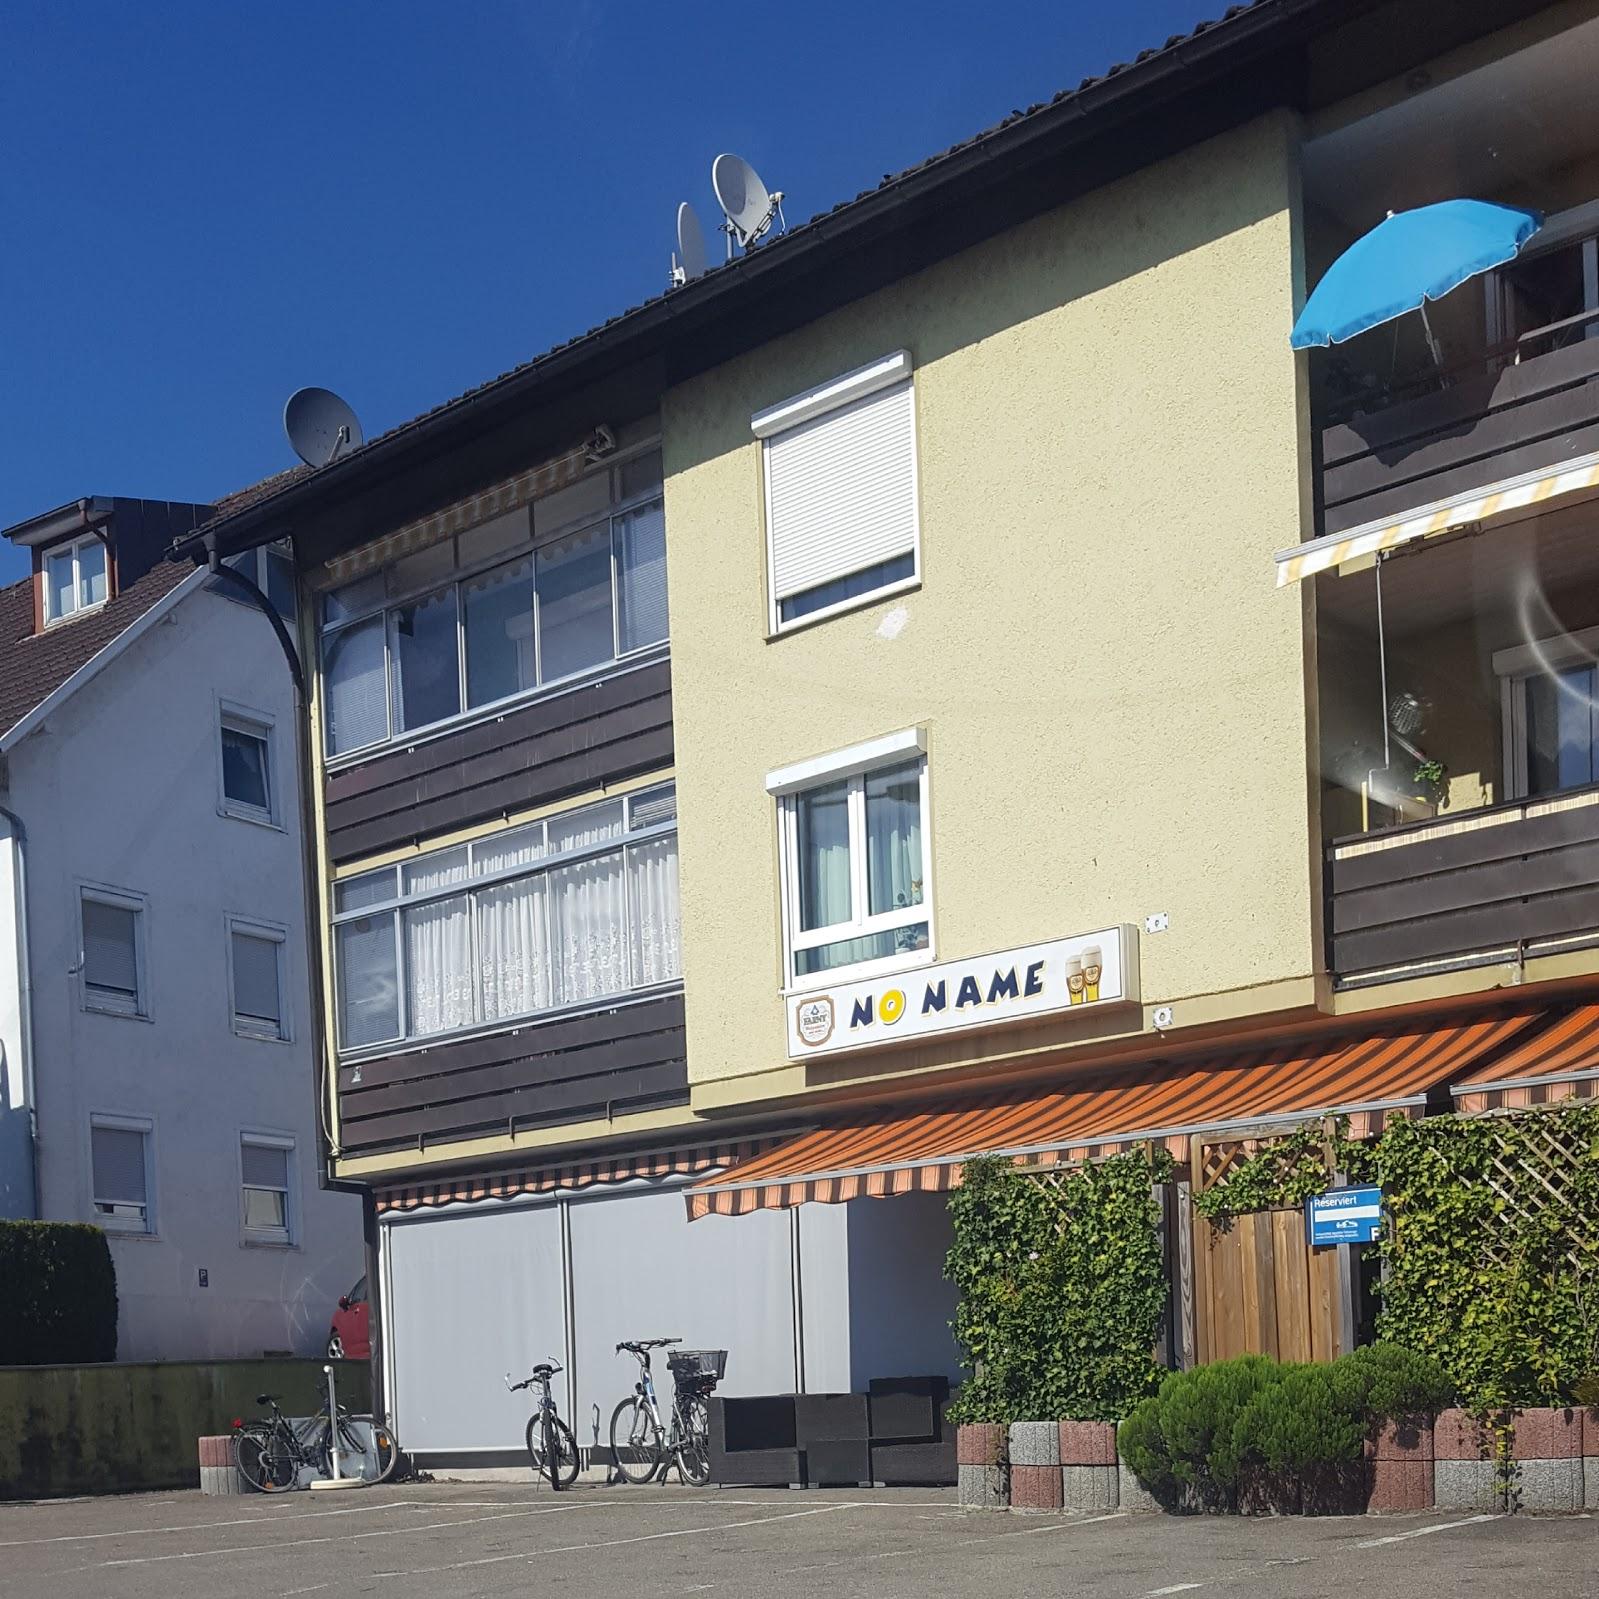 Restaurant "Bistro No Name" in Lindau (Bodensee)